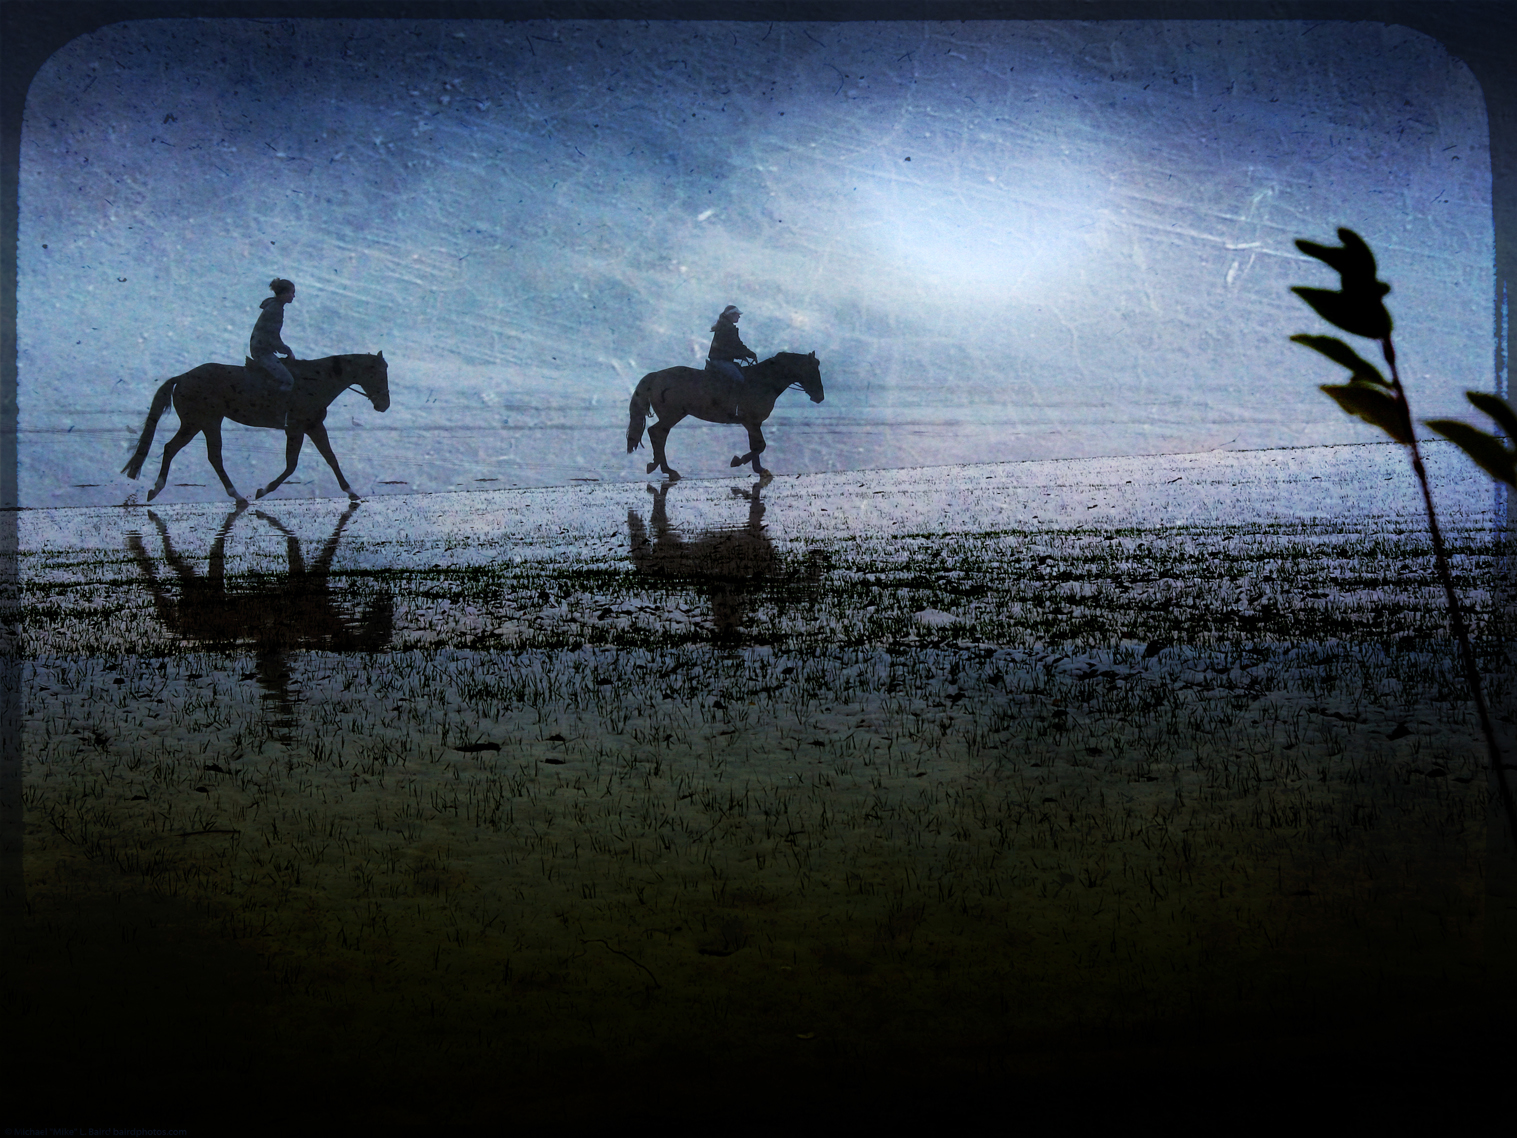 three people riding horses along a sandy beach